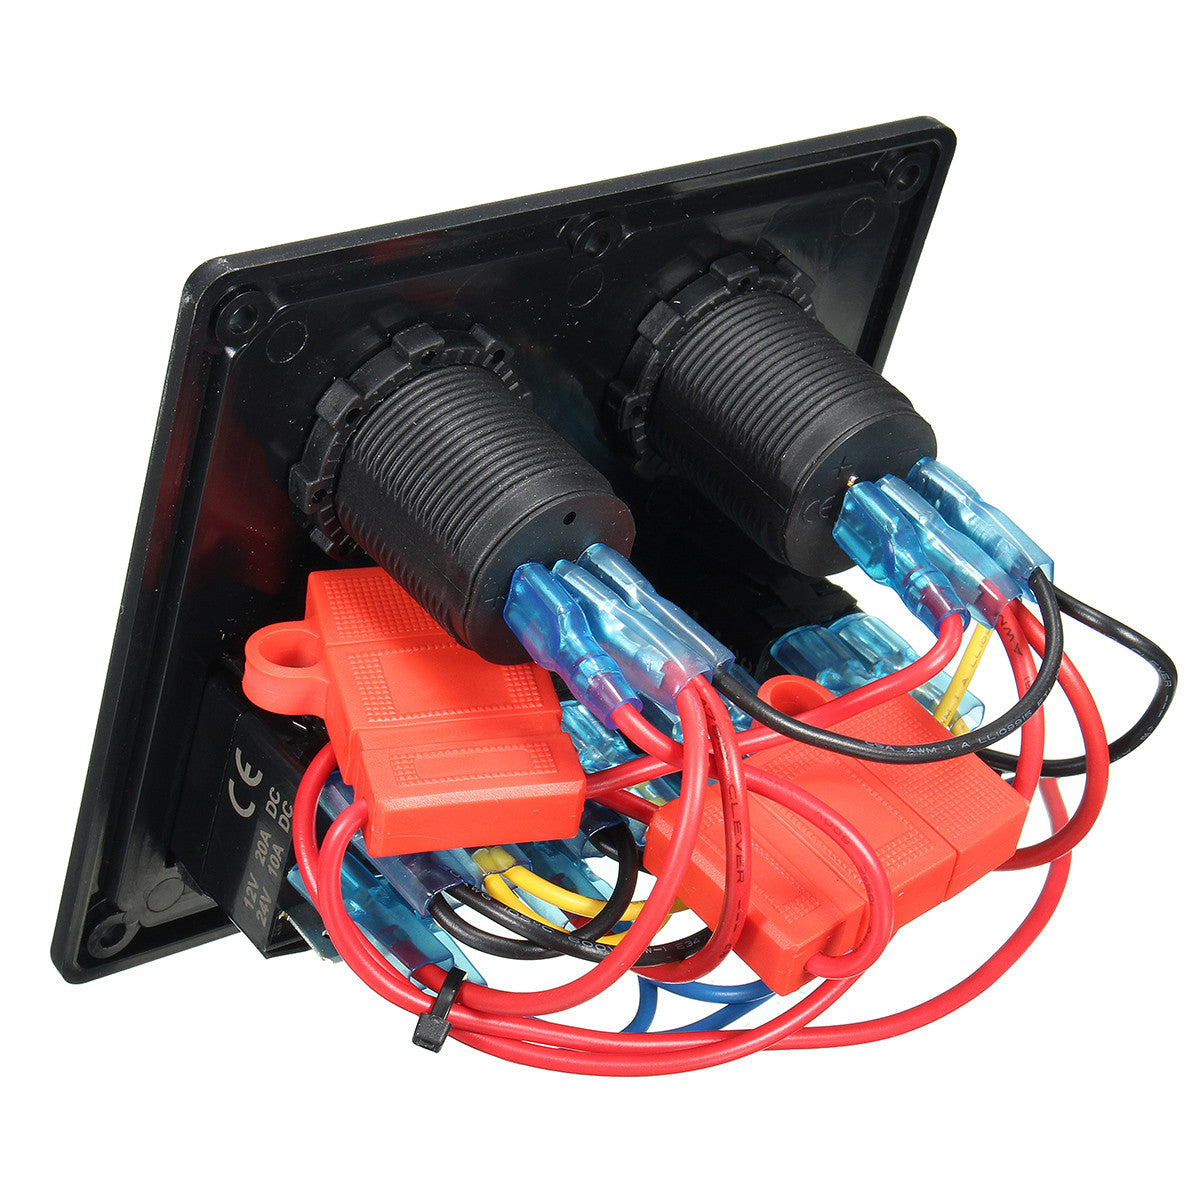 Coral 12V-24V 4 Gang LED Car/Marine Boat/RV Rocker Switch Panel Circuit Dual USB Power Socket